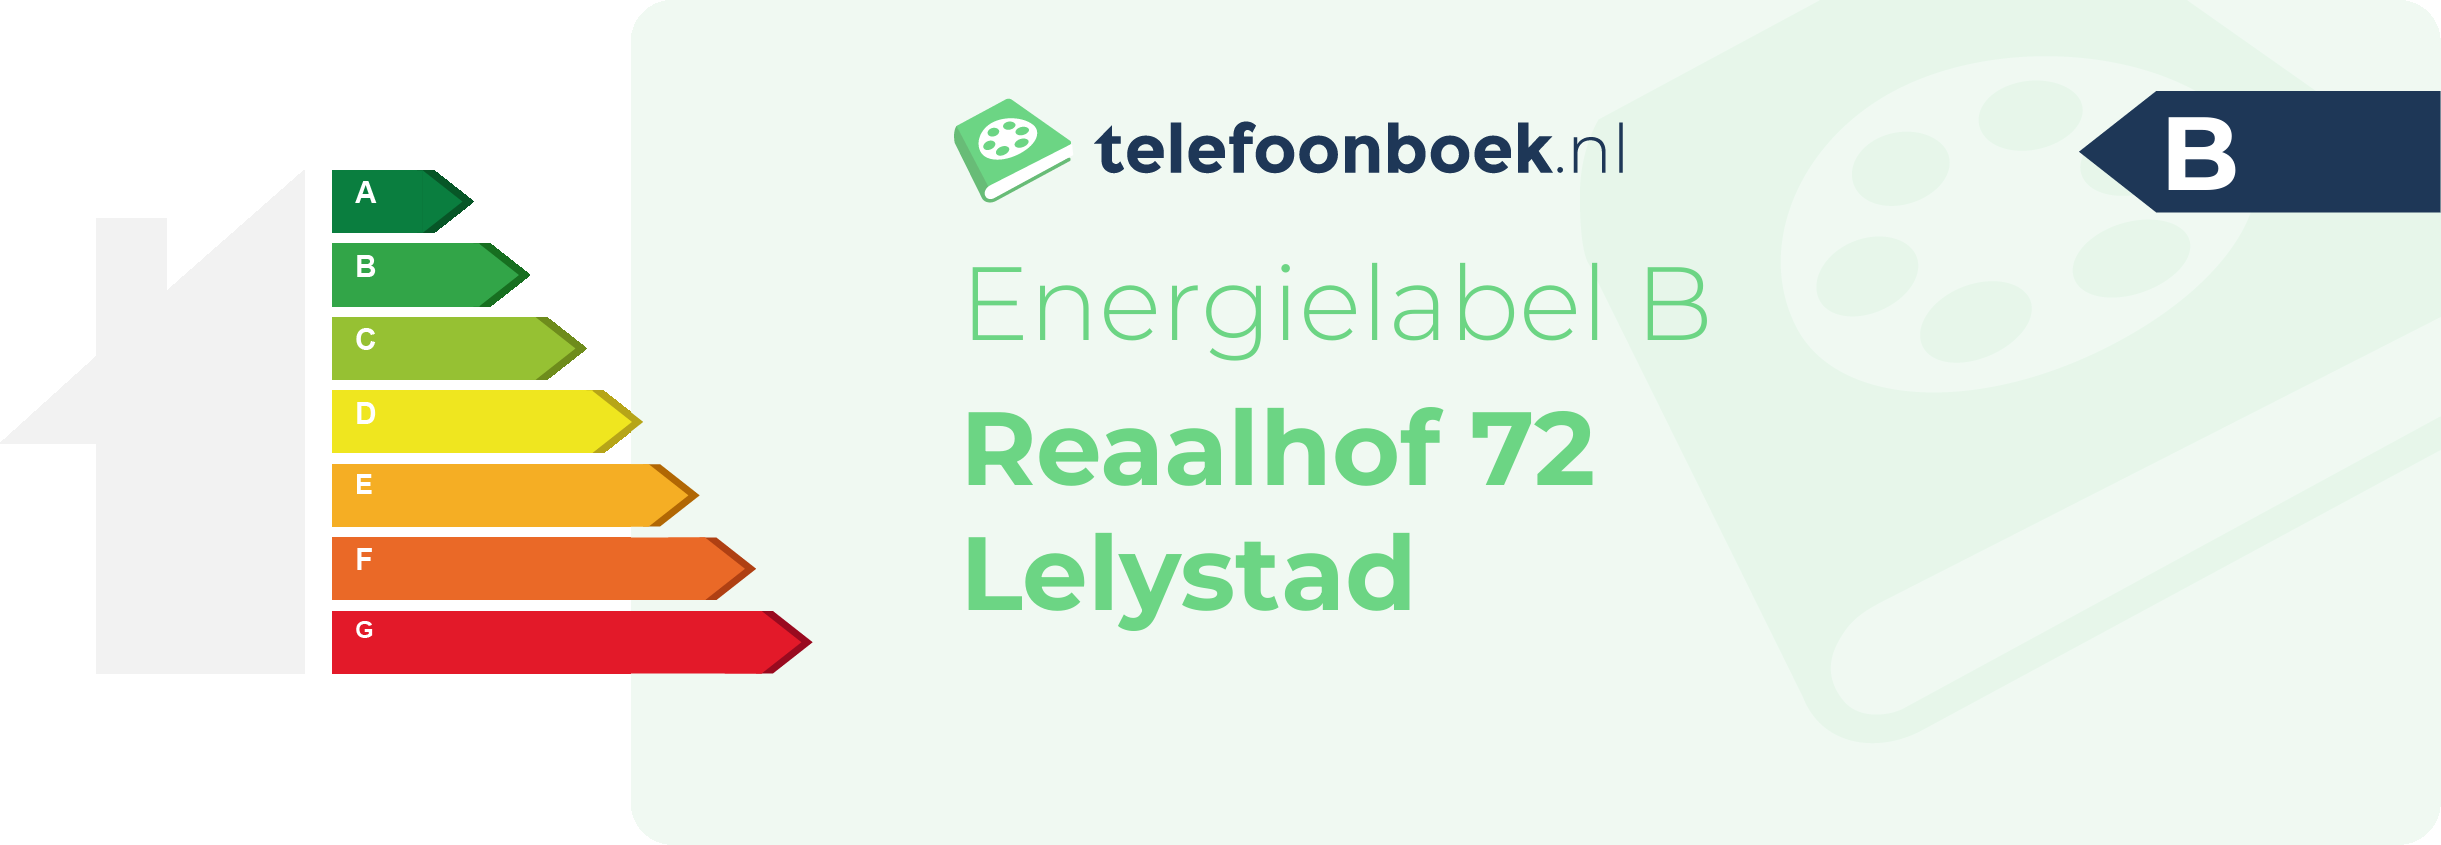 Energielabel Reaalhof 72 Lelystad